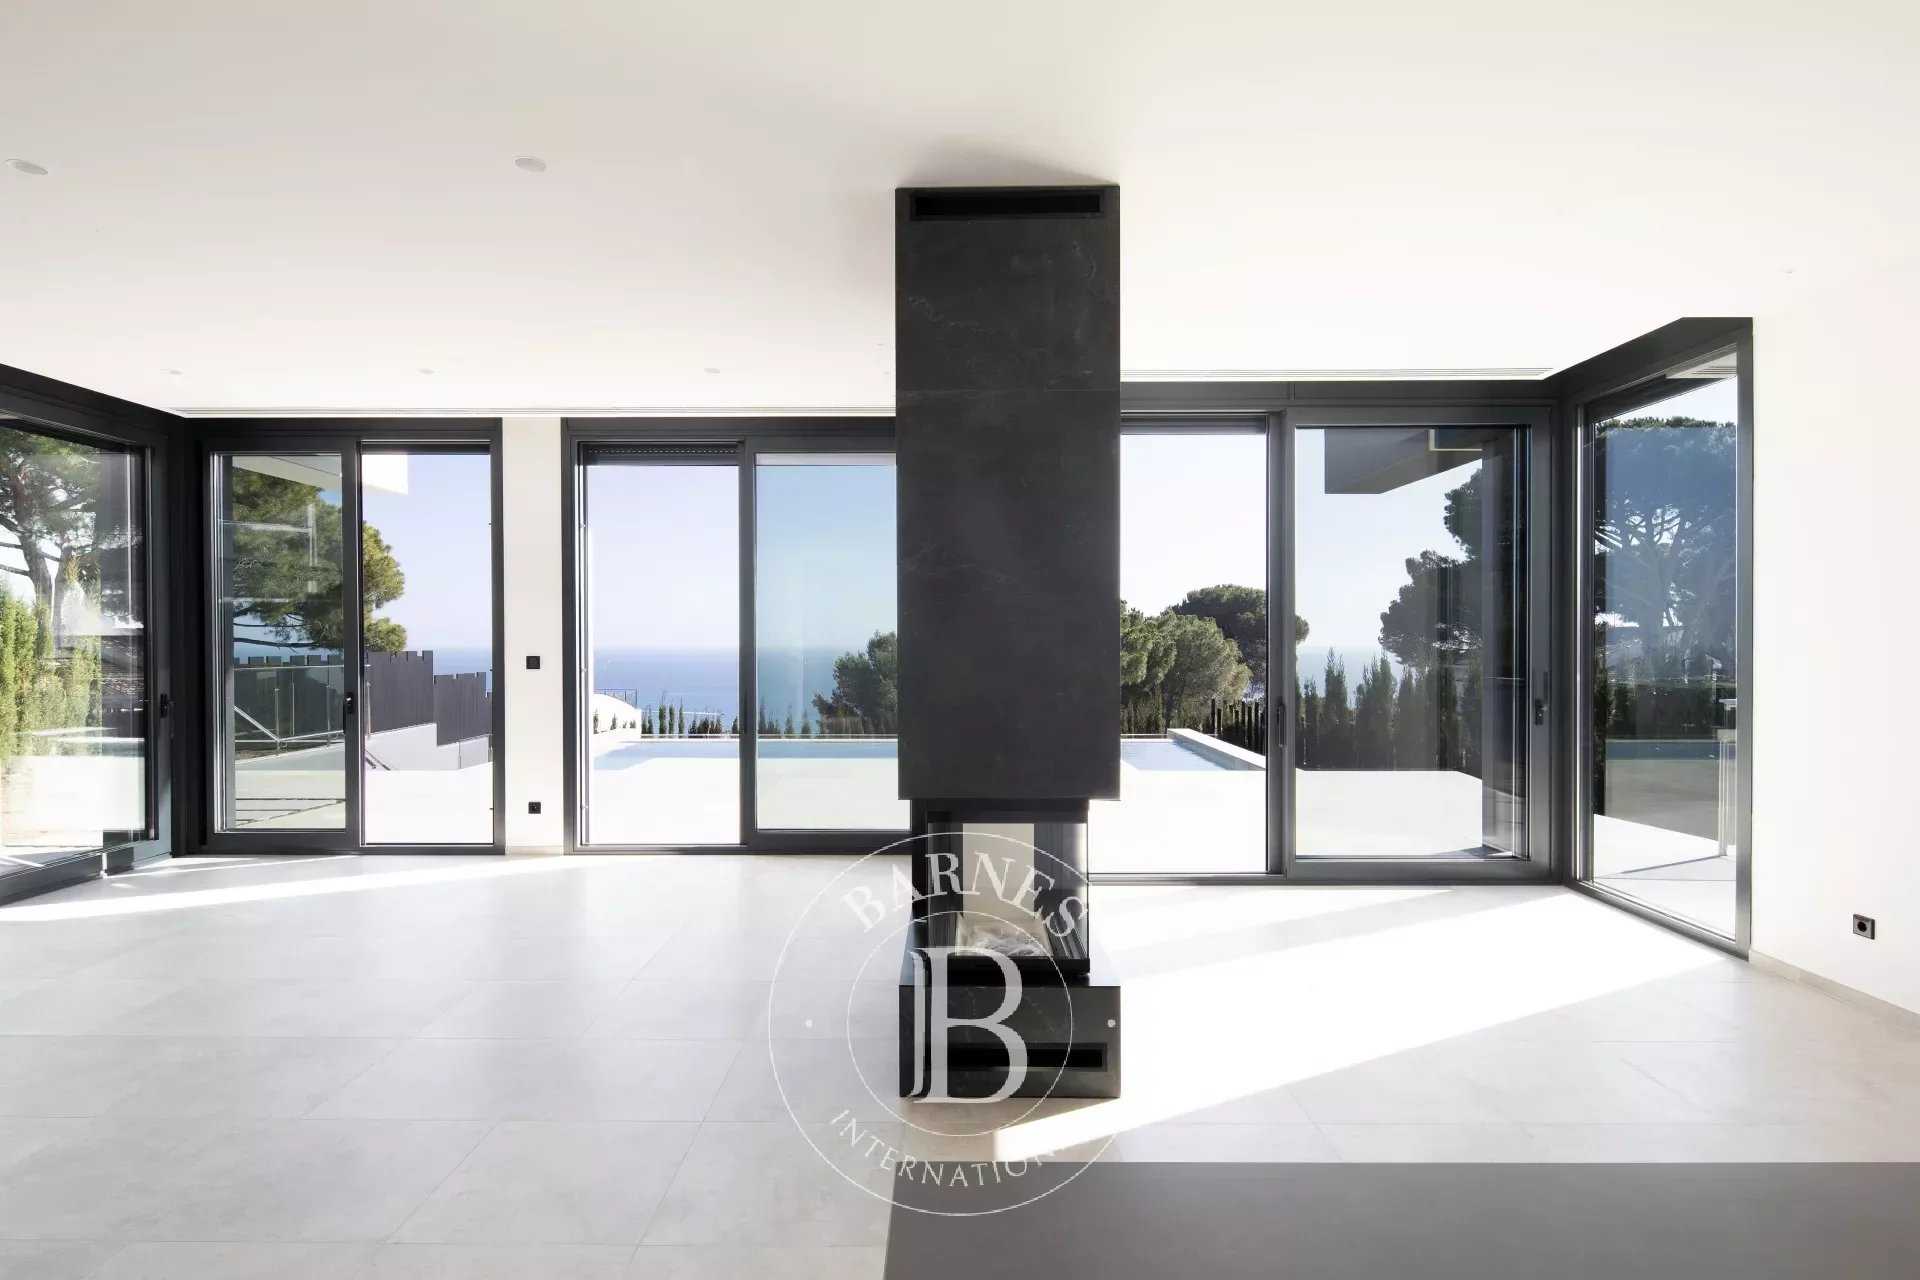 Preciosa villa de obra nueva en venta en Caldes d'Estrac, Barcelona. Caldes d'Estrac  -  ref 84539381 (picture 2)